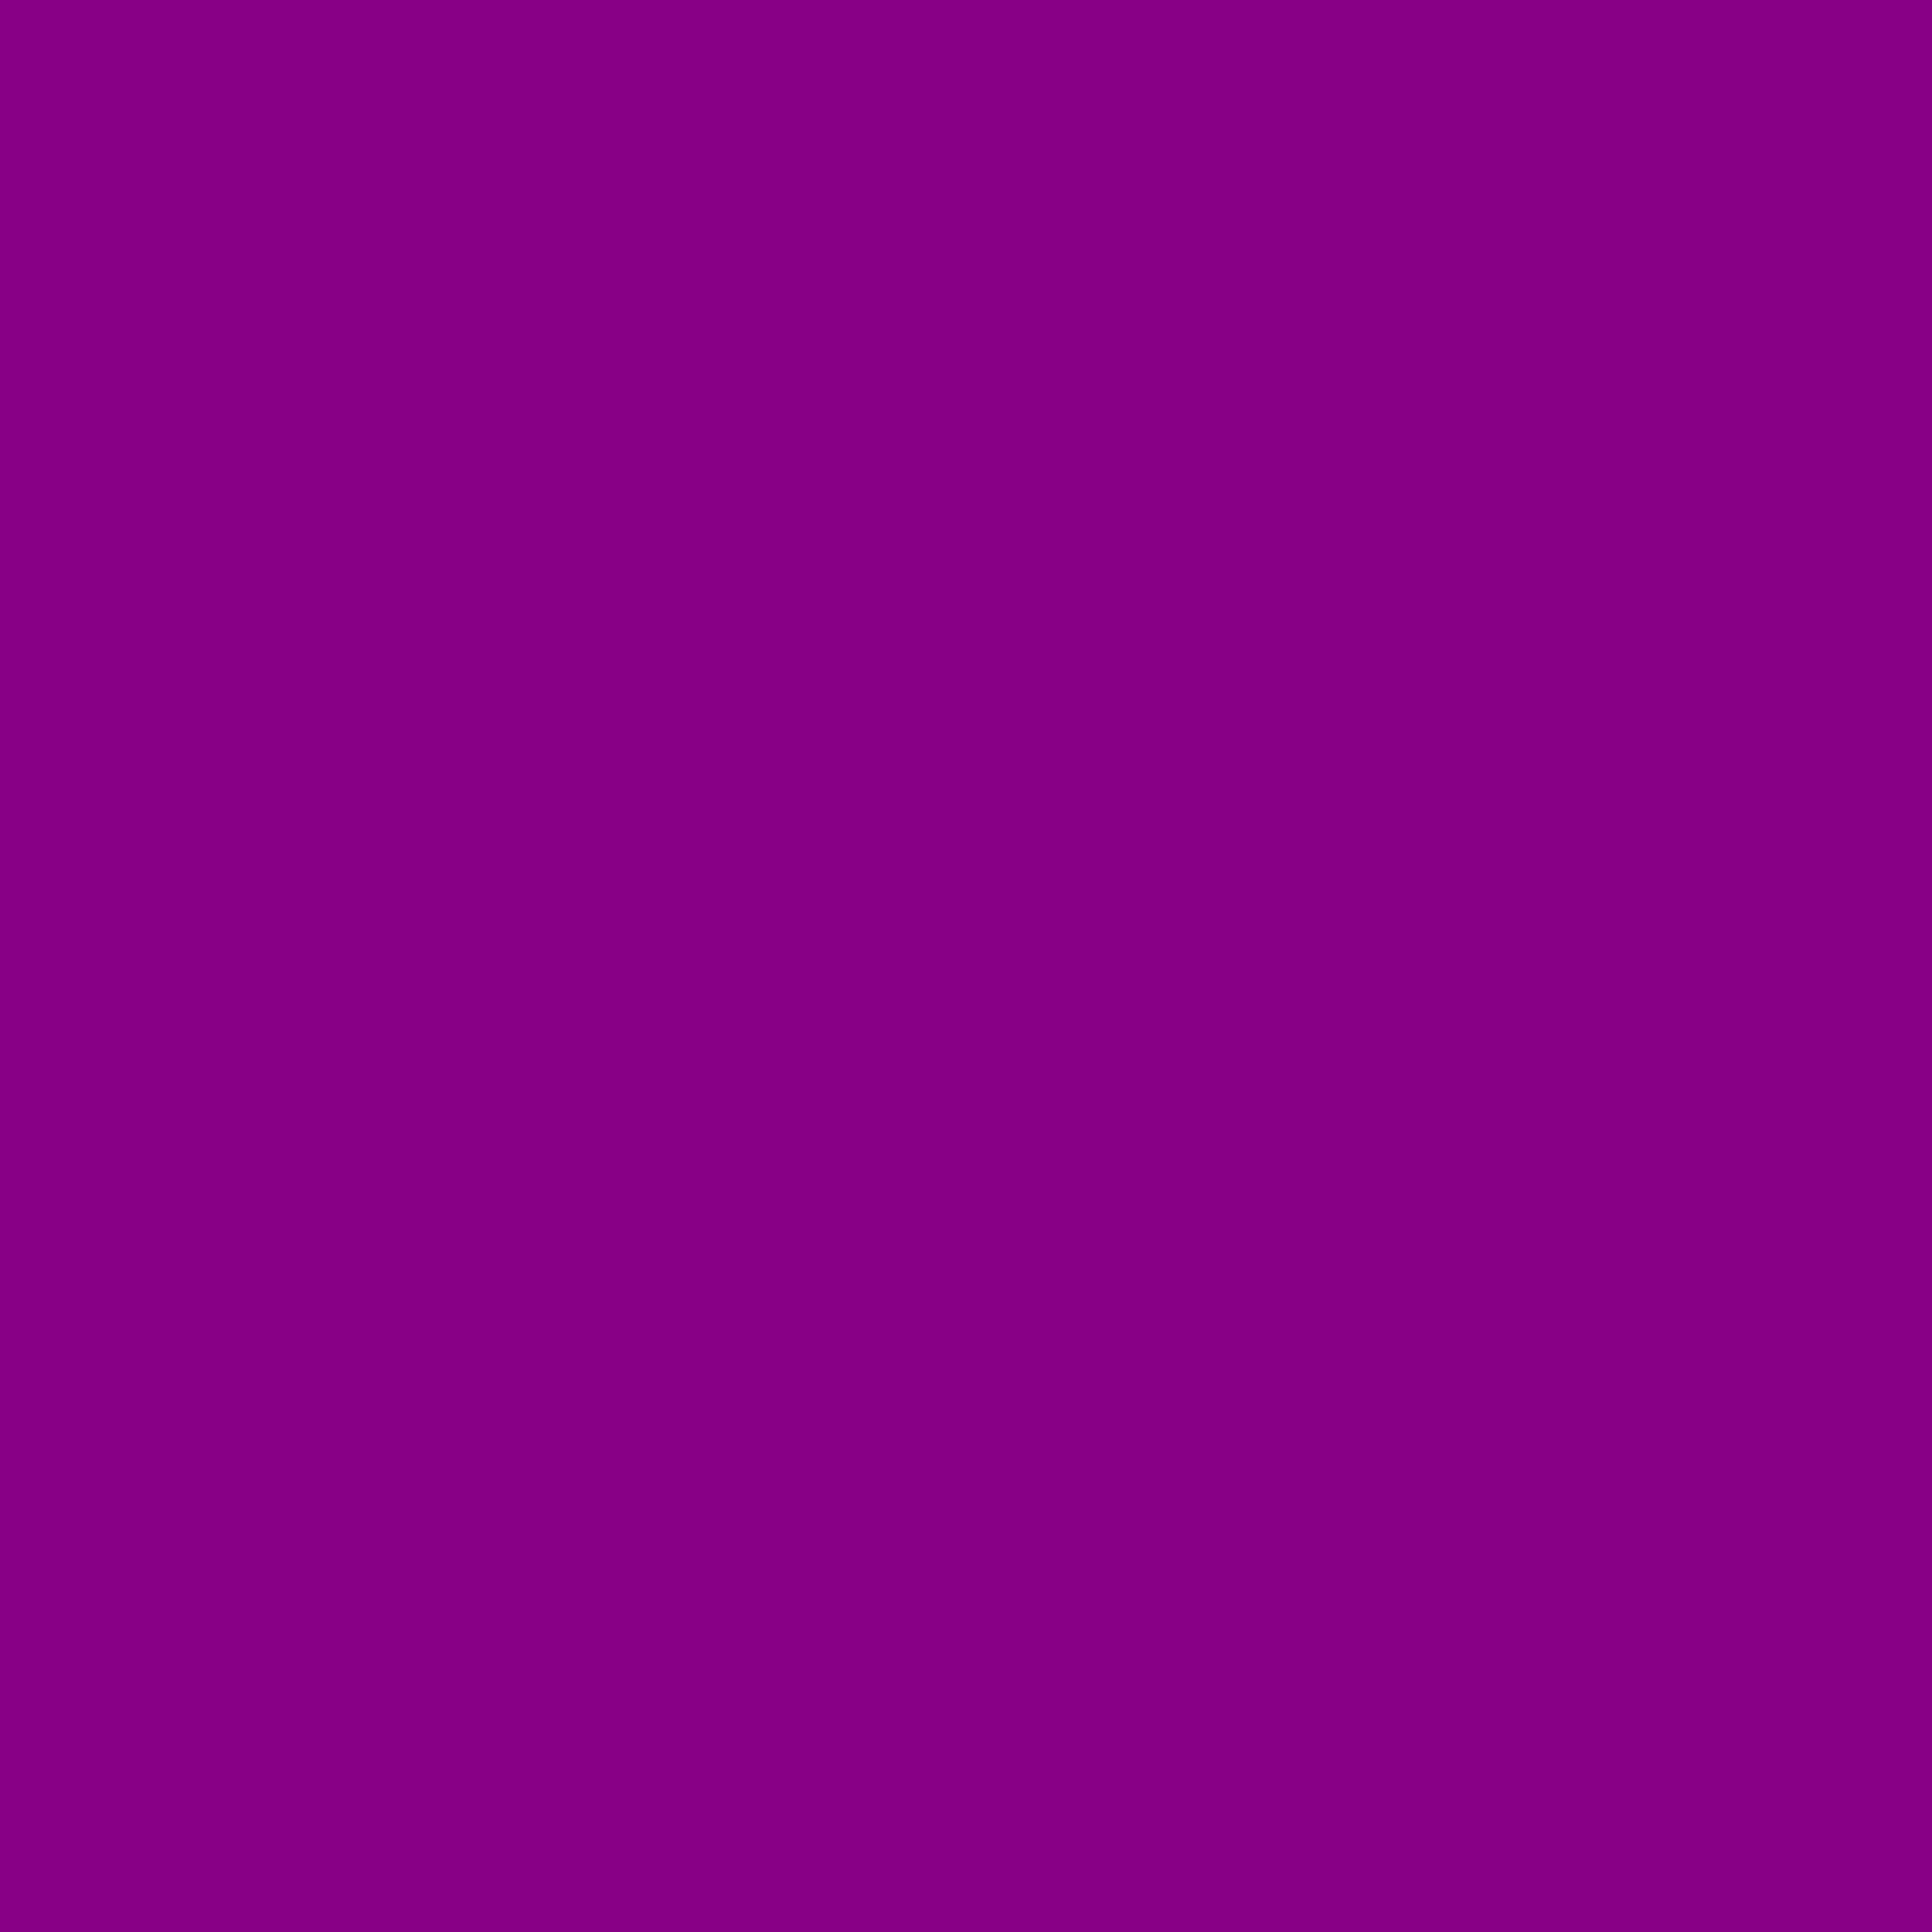 2048x2048 Mardi Gras Solid Color Background